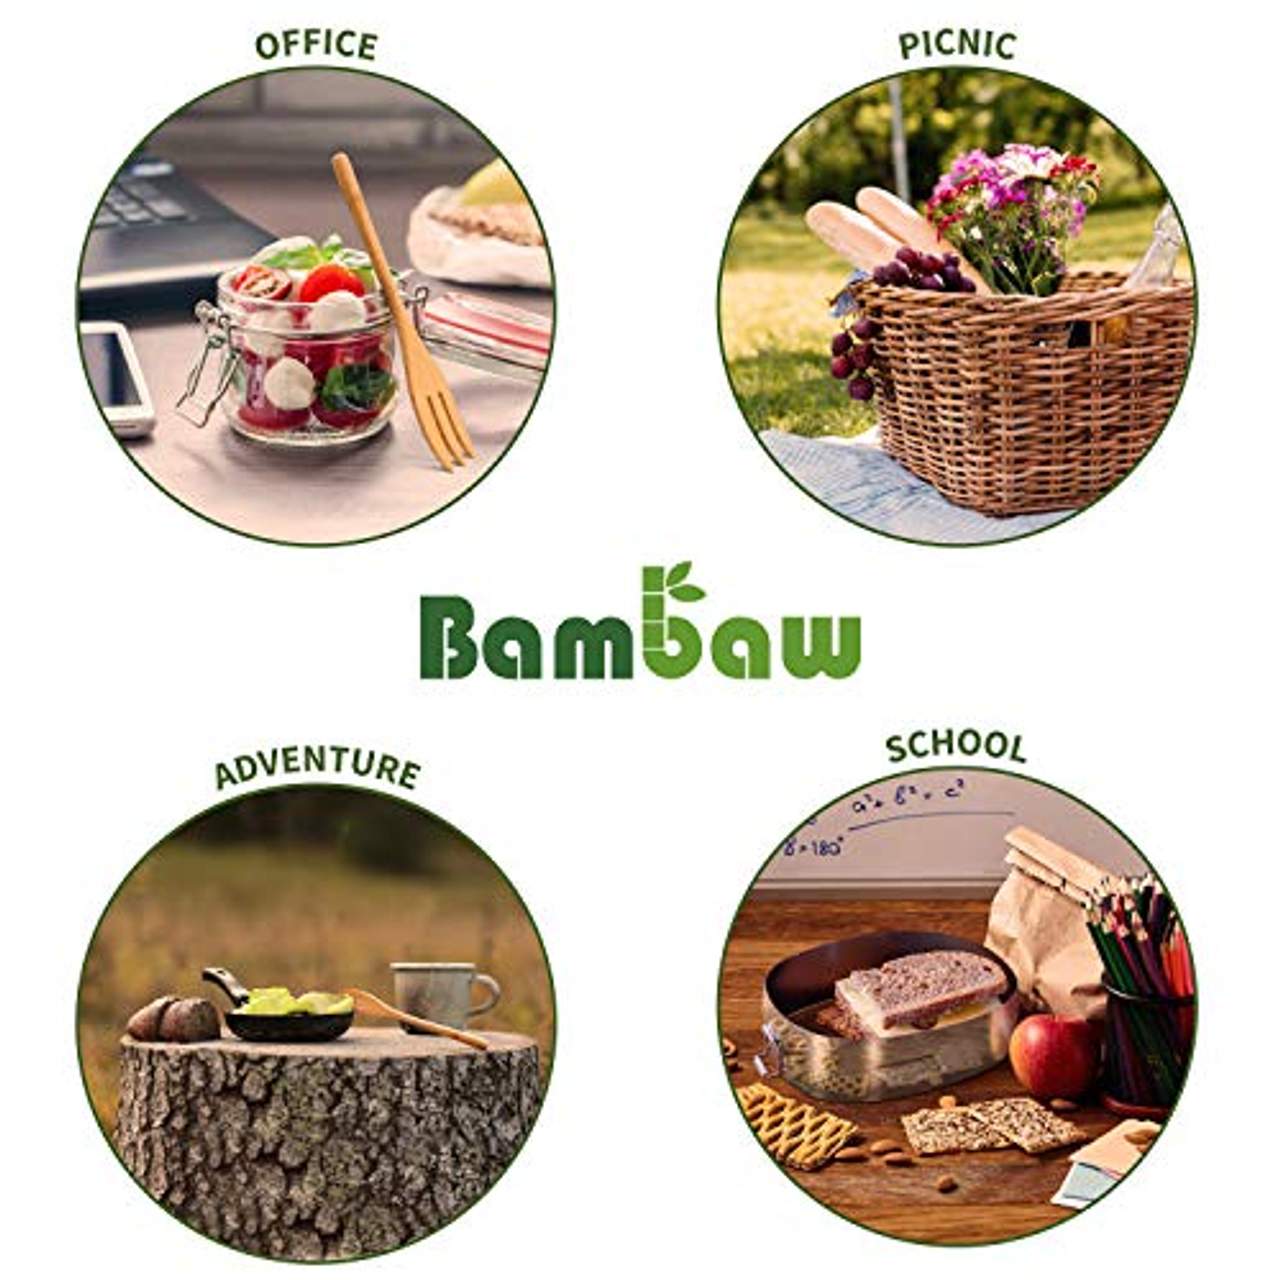 Bambaw Eßbesteck aus Bambus